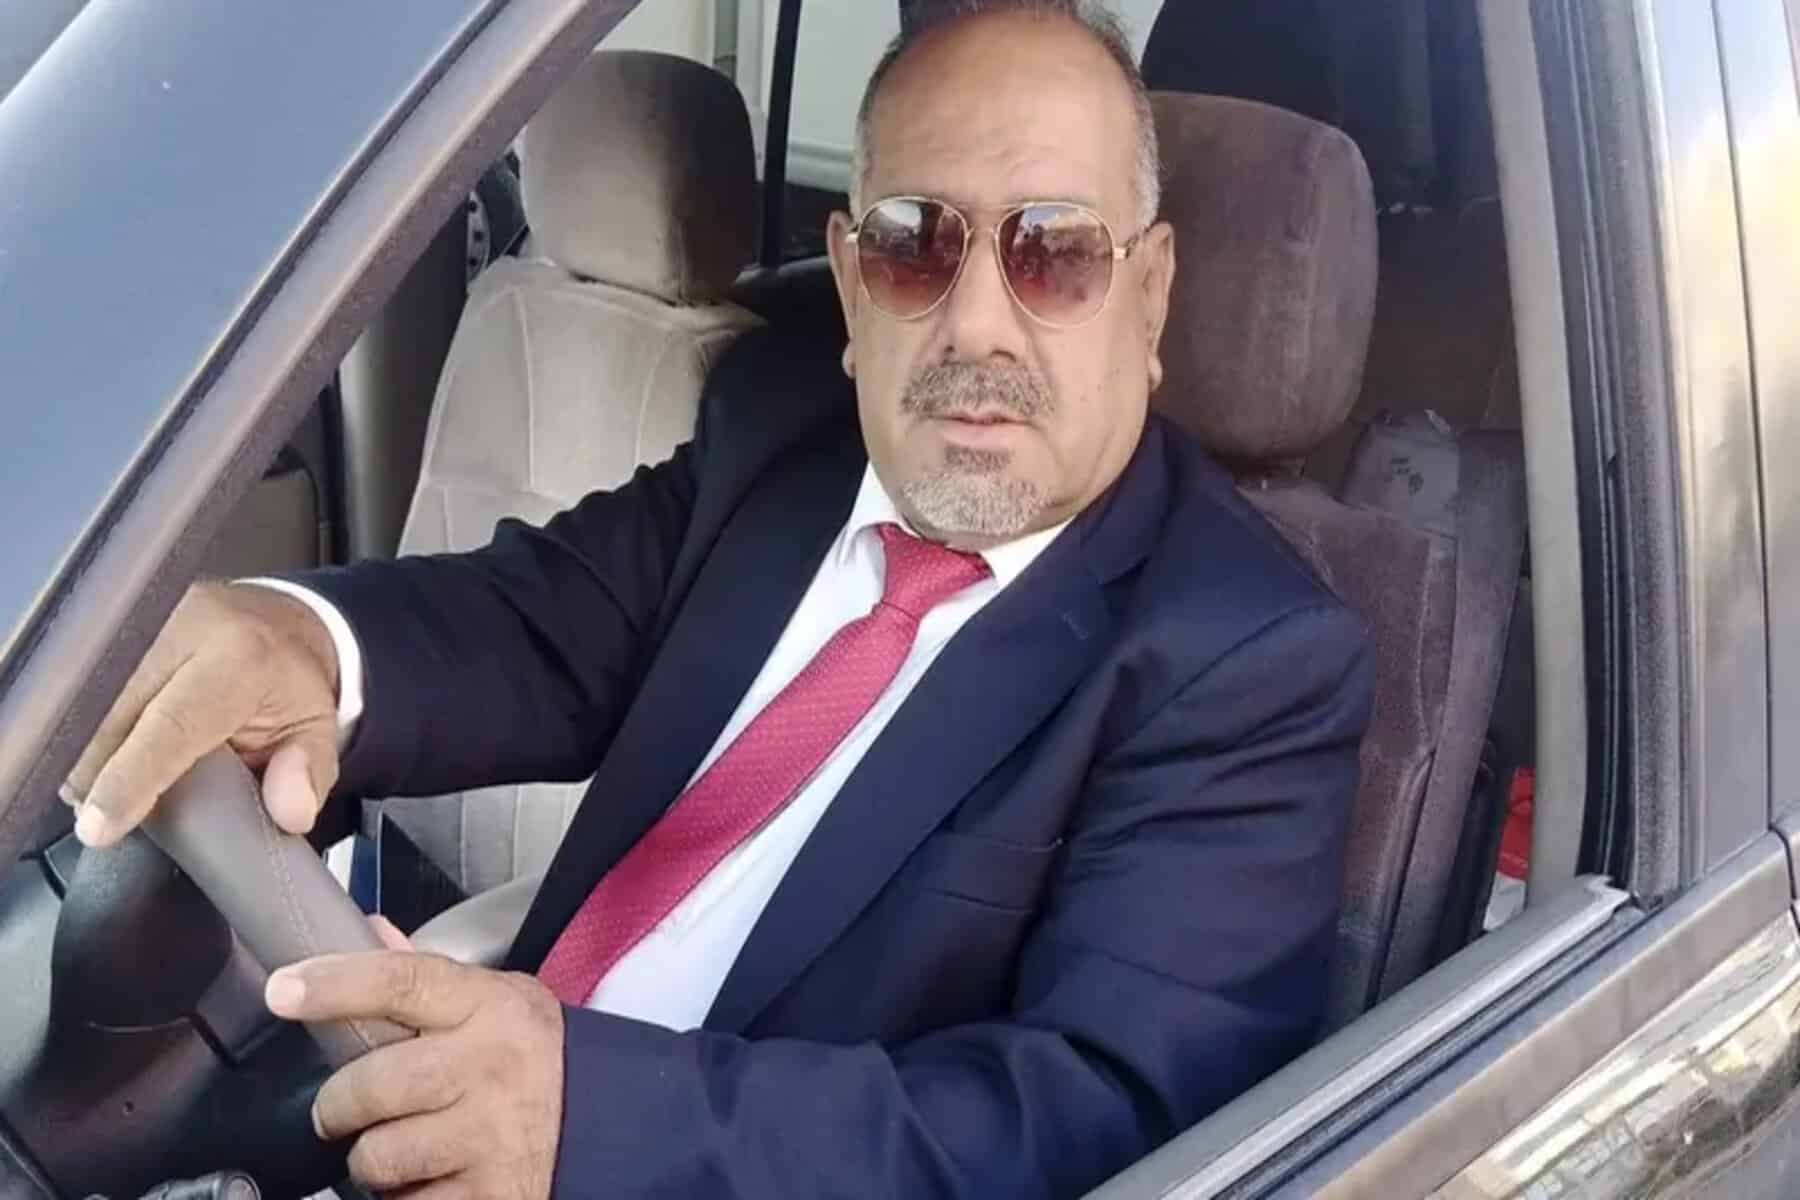  alarabtrend.com تيك توكر أردني يخطق 30 أردنيا وليد عبد الكريم قطيش 